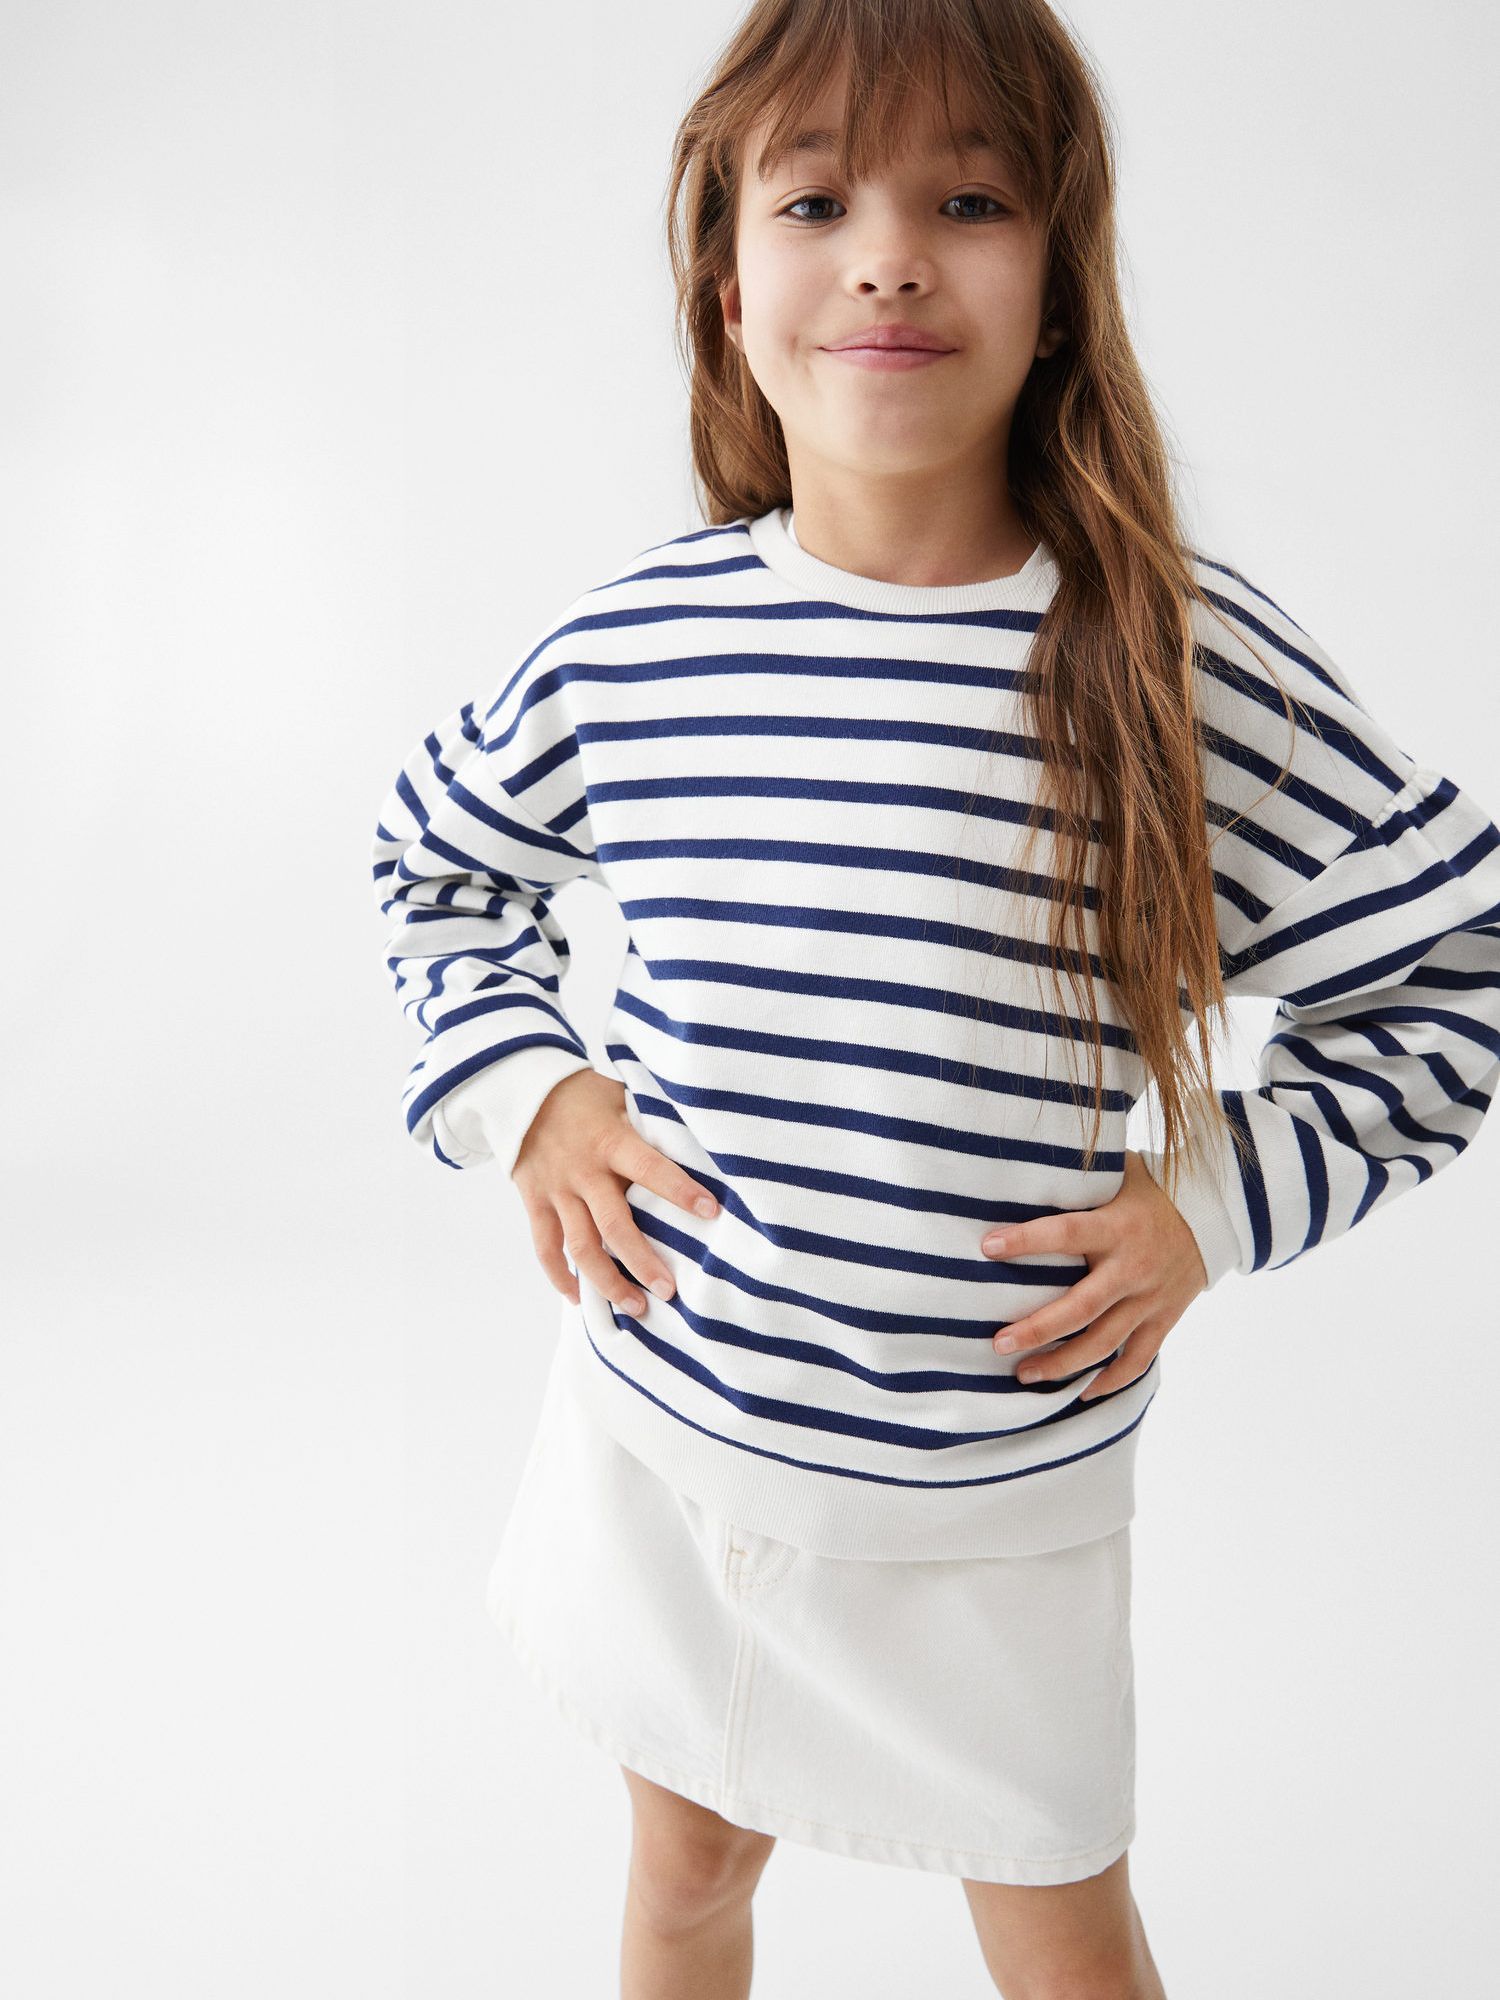 Mango Kids' Sea Cotton Striped Sweatshirt, Navy/White